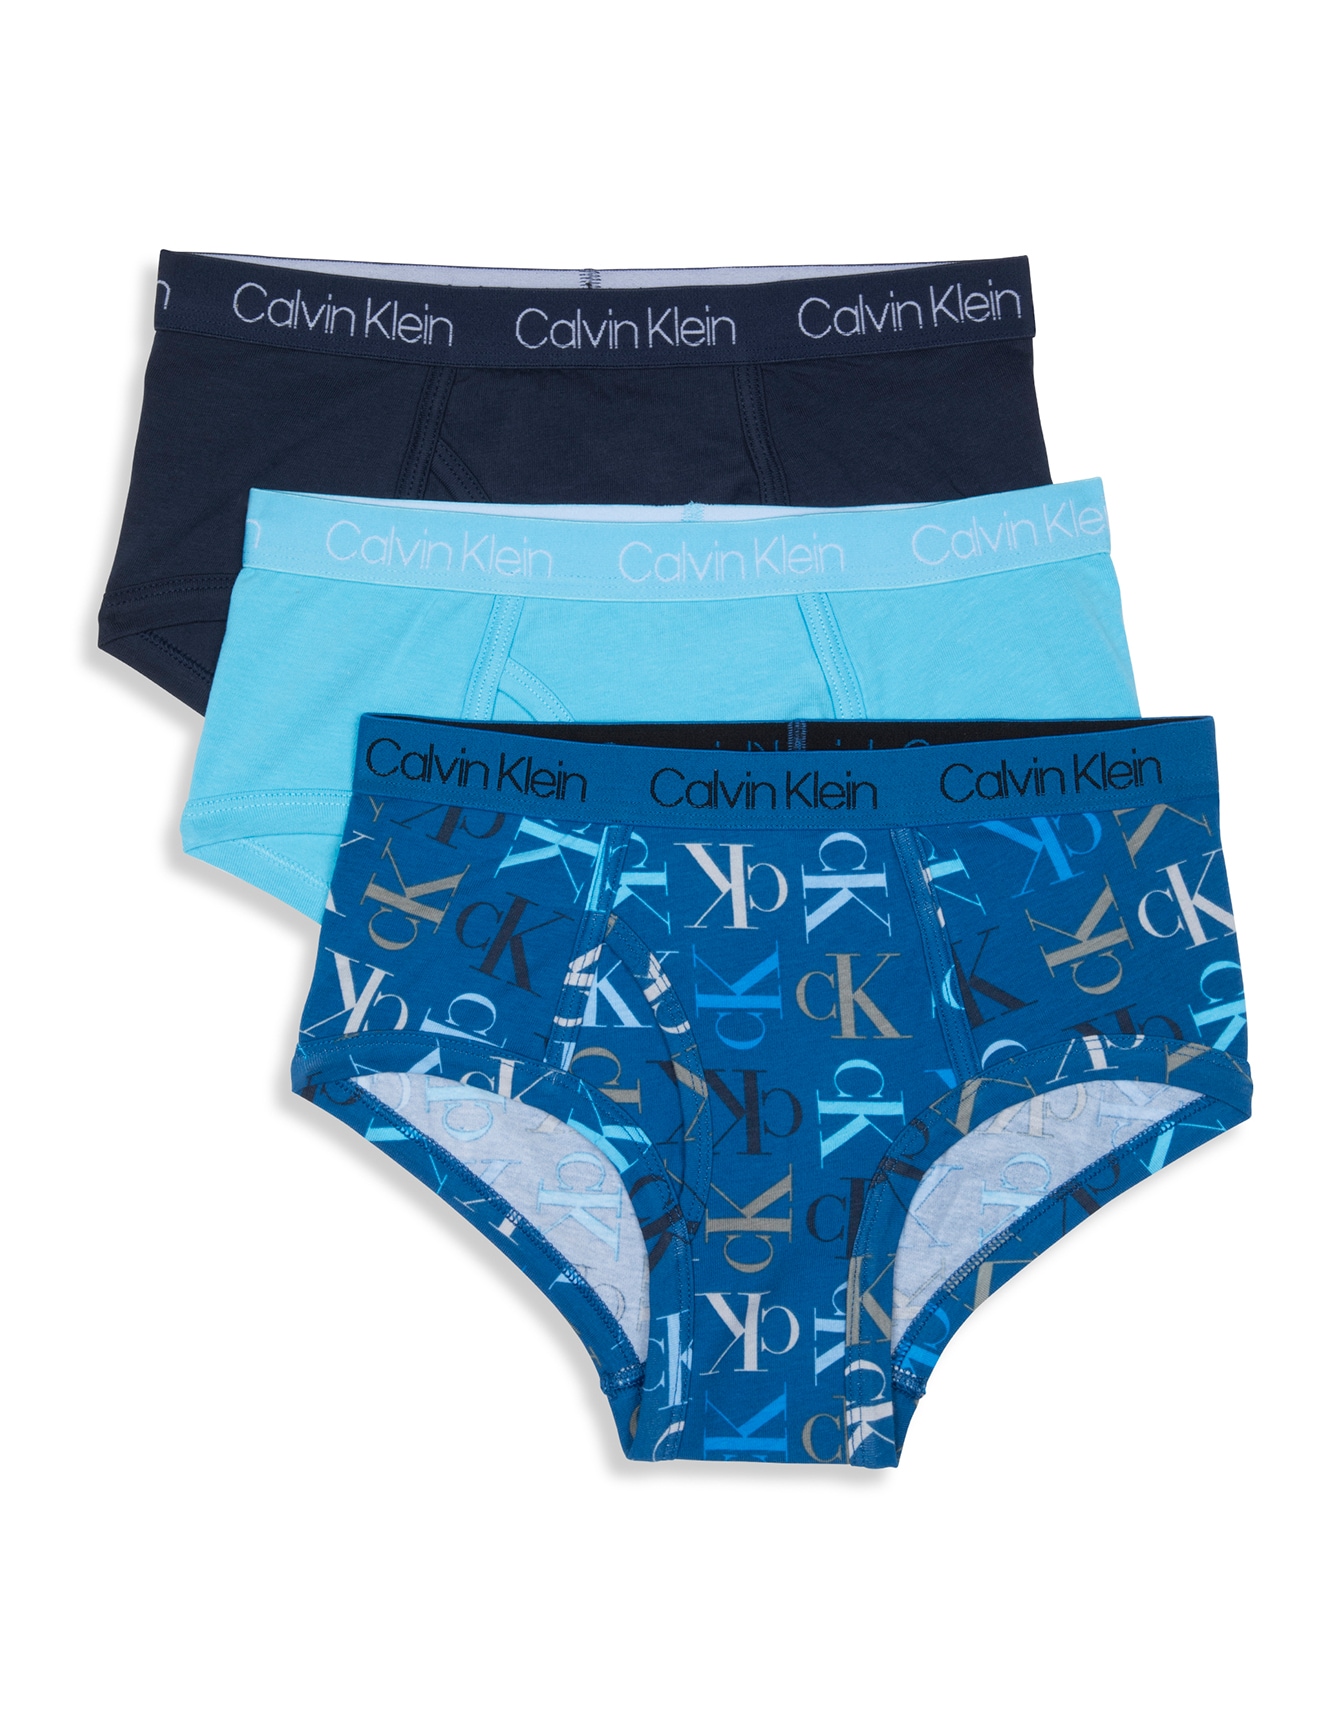 Calvin Klein Boxer Briefs, 3-Pack, Blue product photo